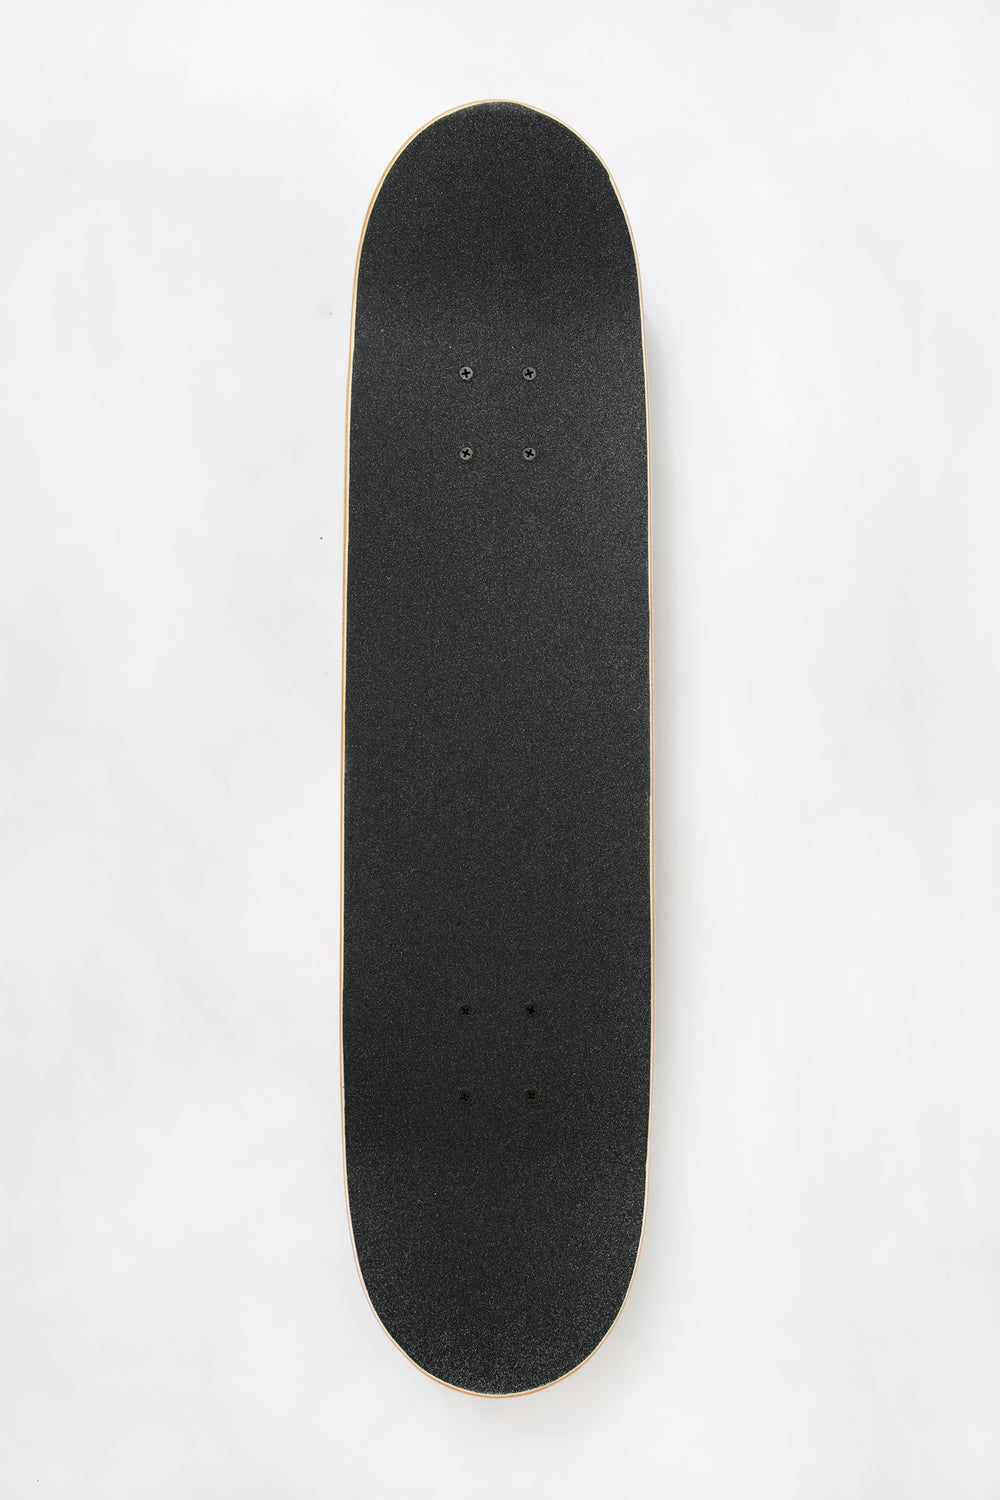 Death Valley Geisha Skateboard 7.75